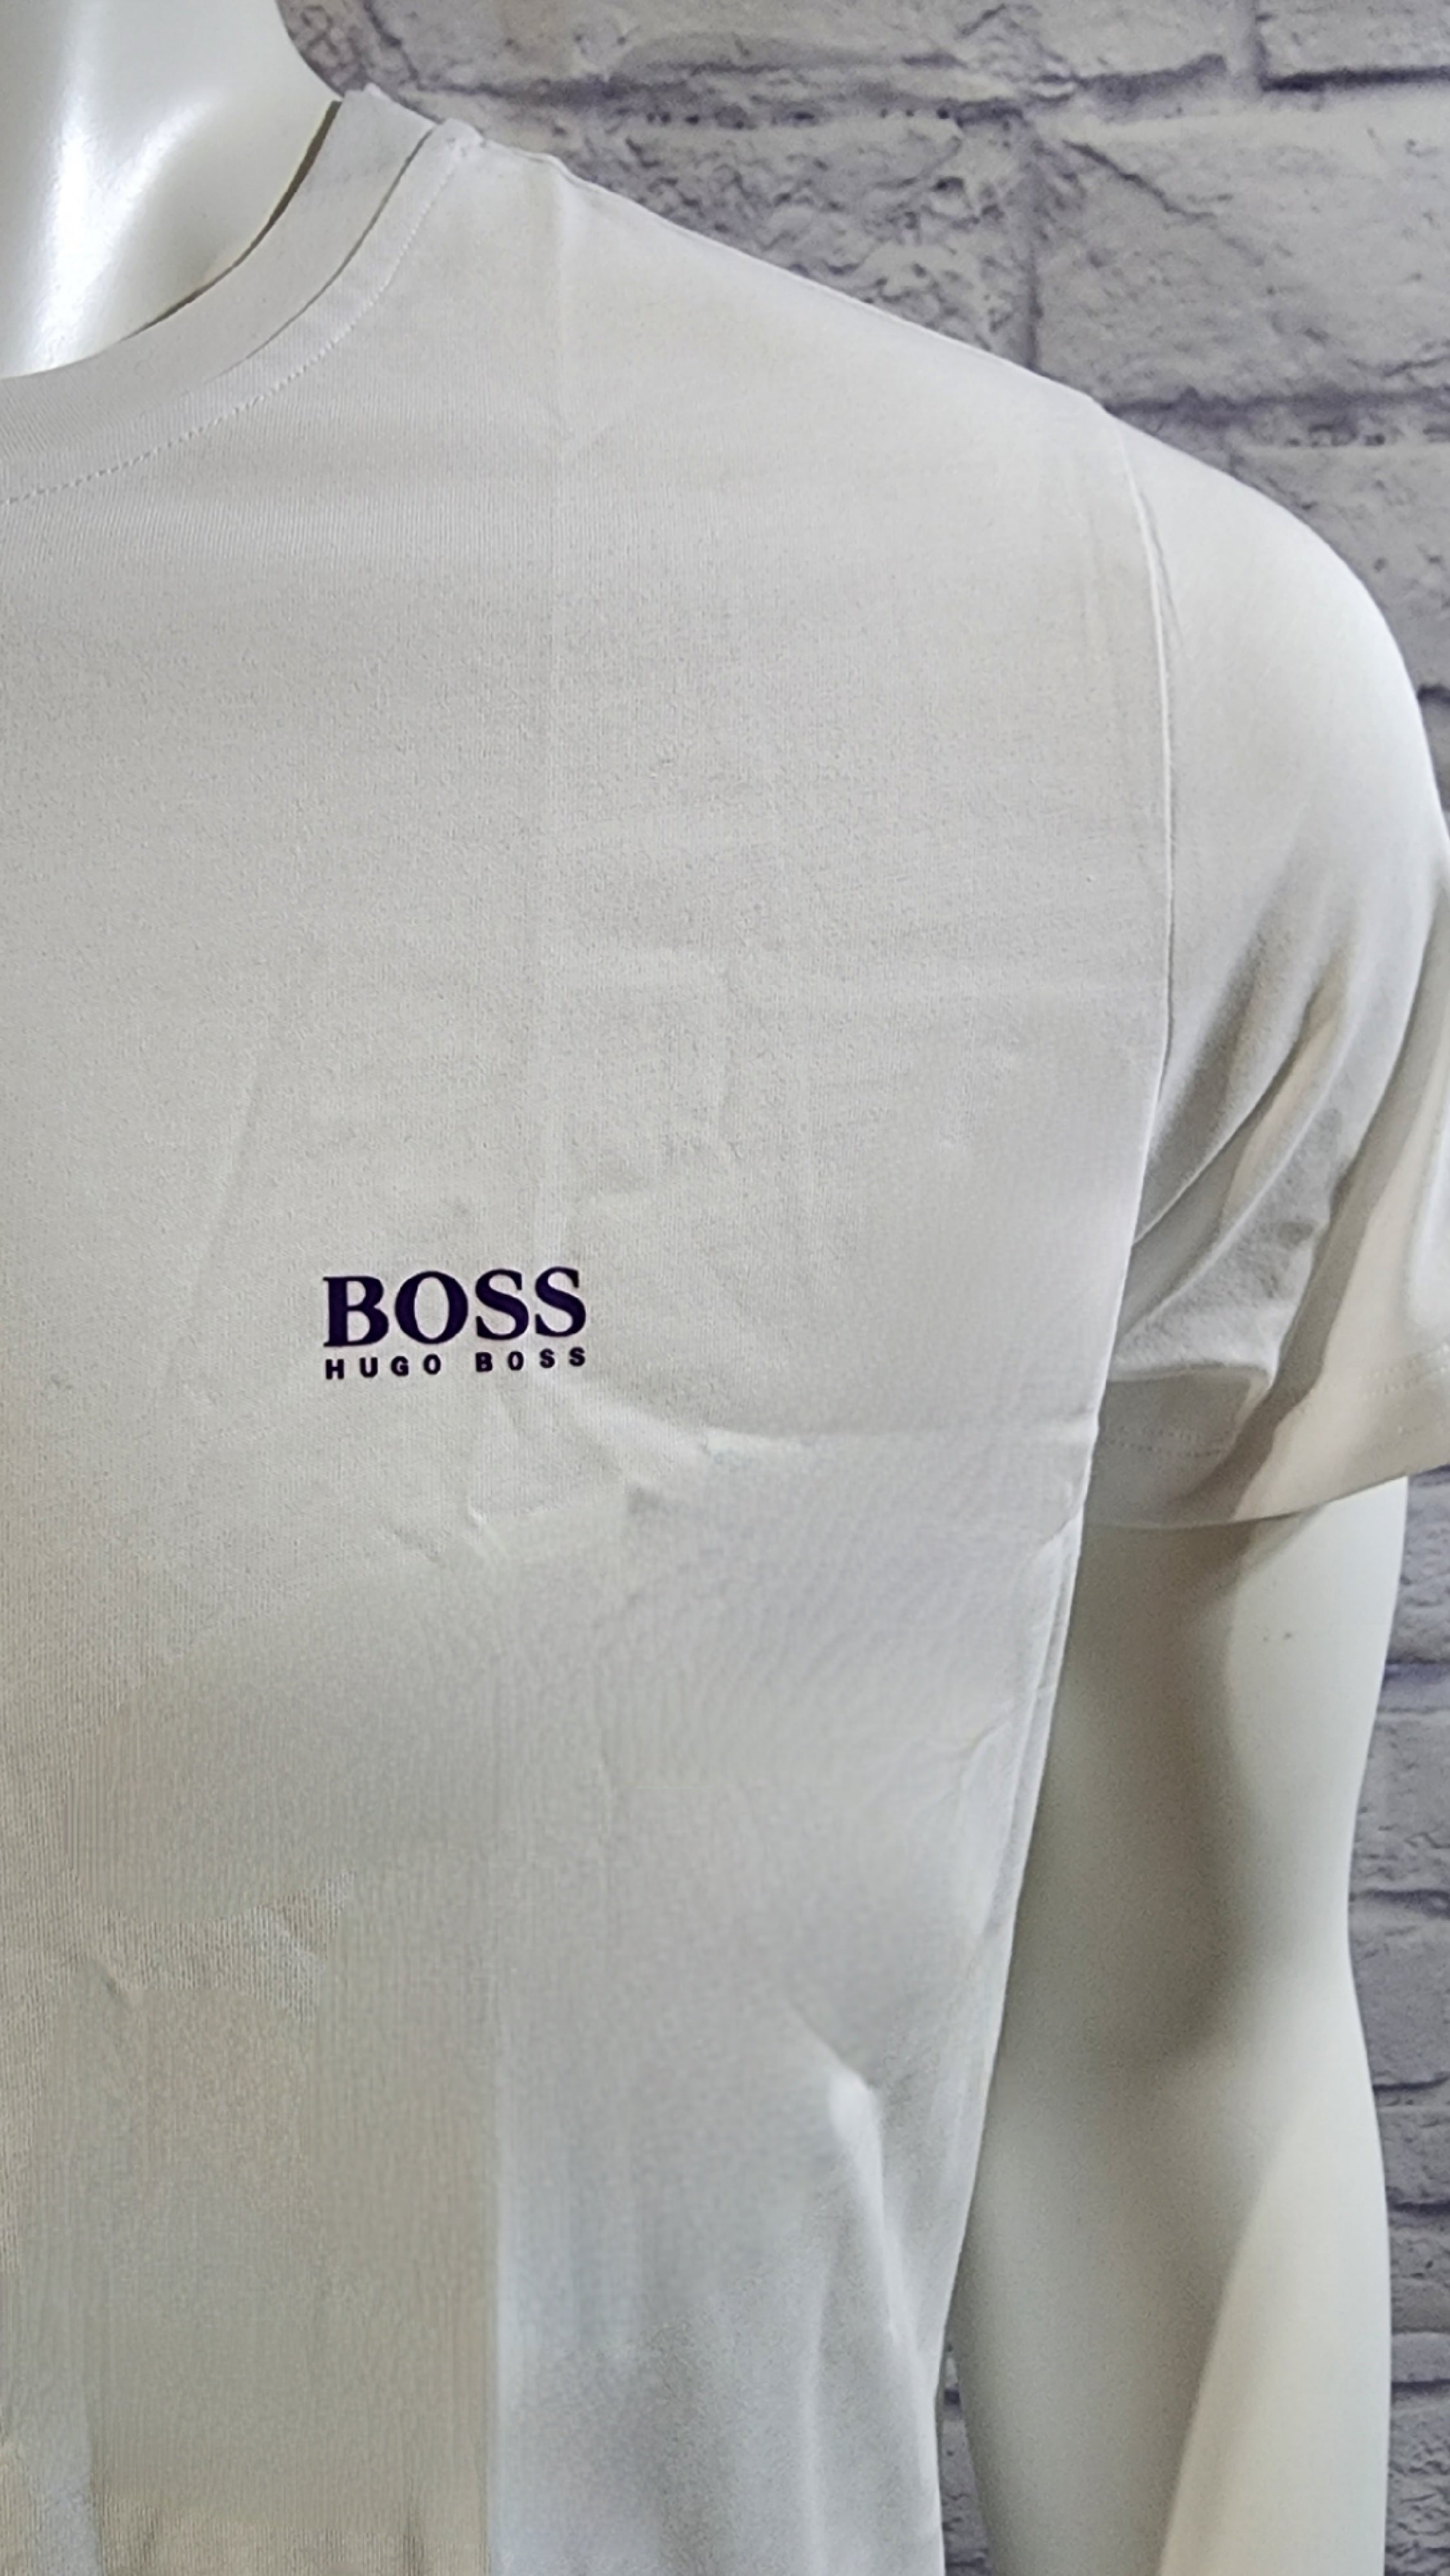 Hugo Boss: Basic T-Shirt (White with Purple Logo)